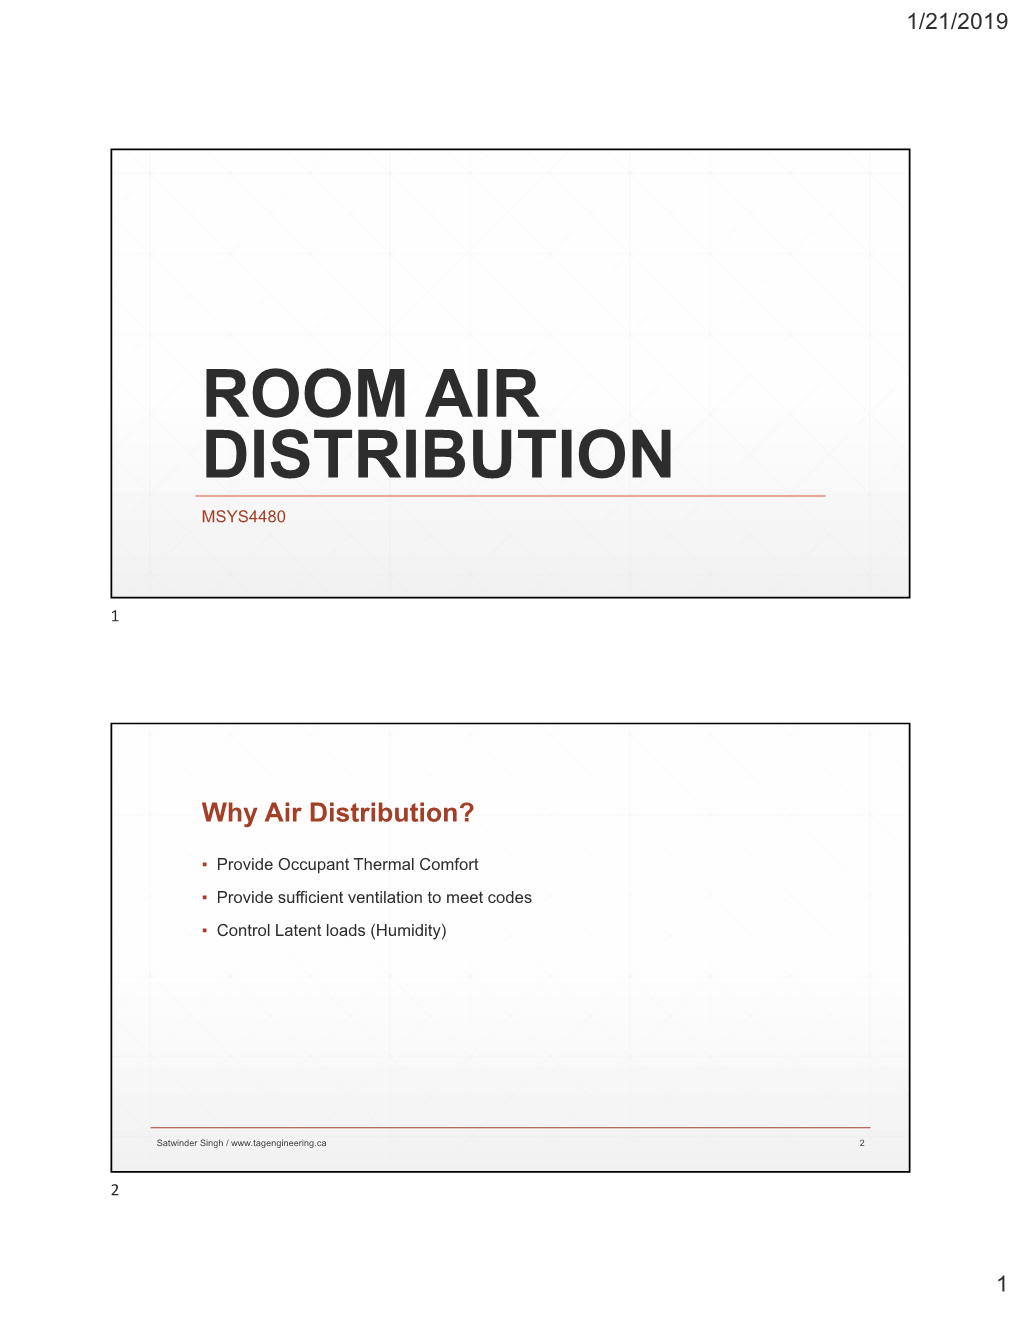 Room Air Distribution